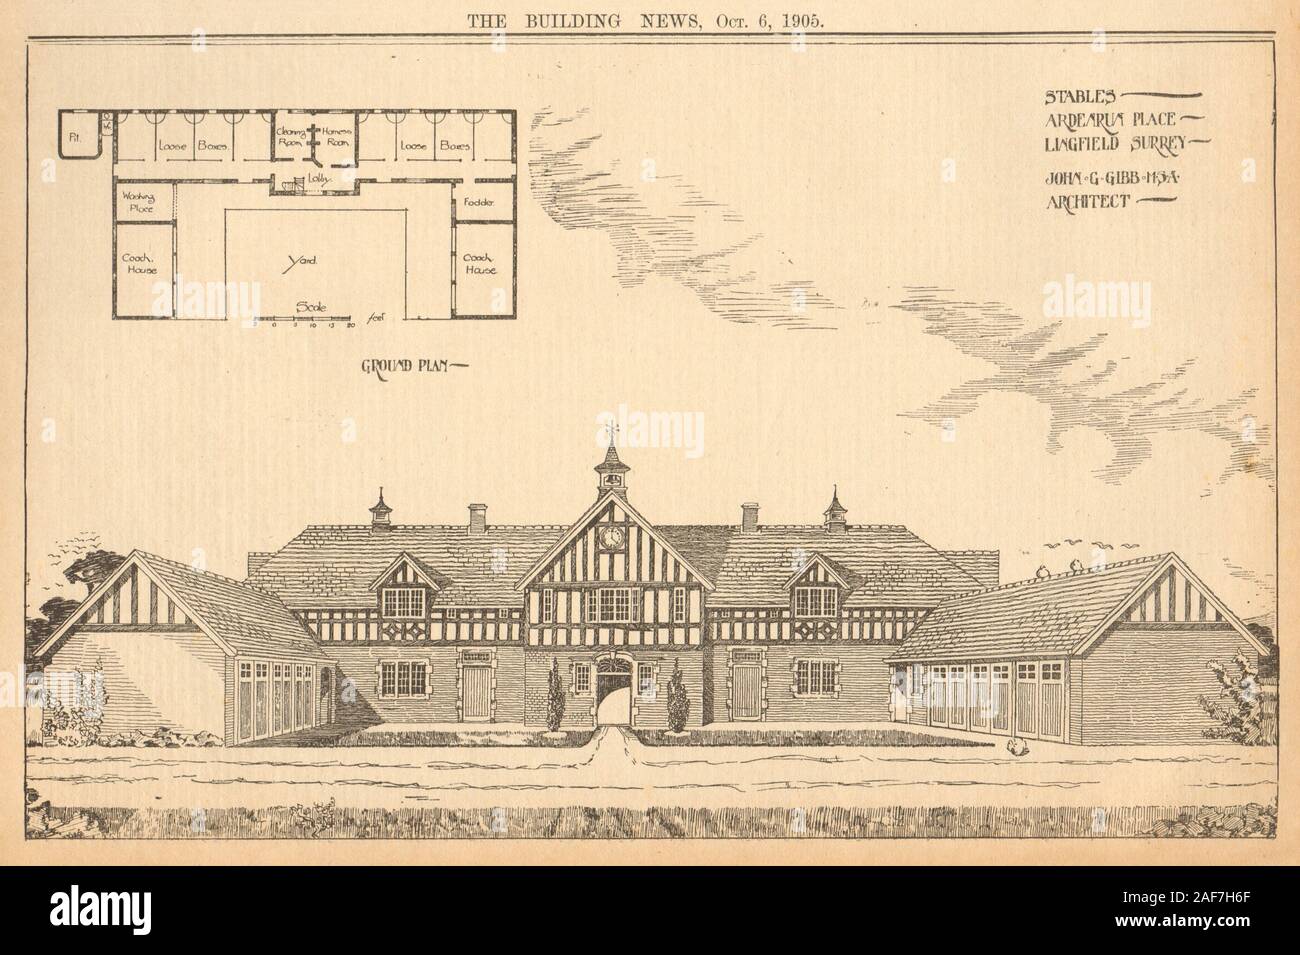 Stables, Ardenrun Place, Lingfield, Surrey, John G. Gibb, Architect 1905 print Stock Photo